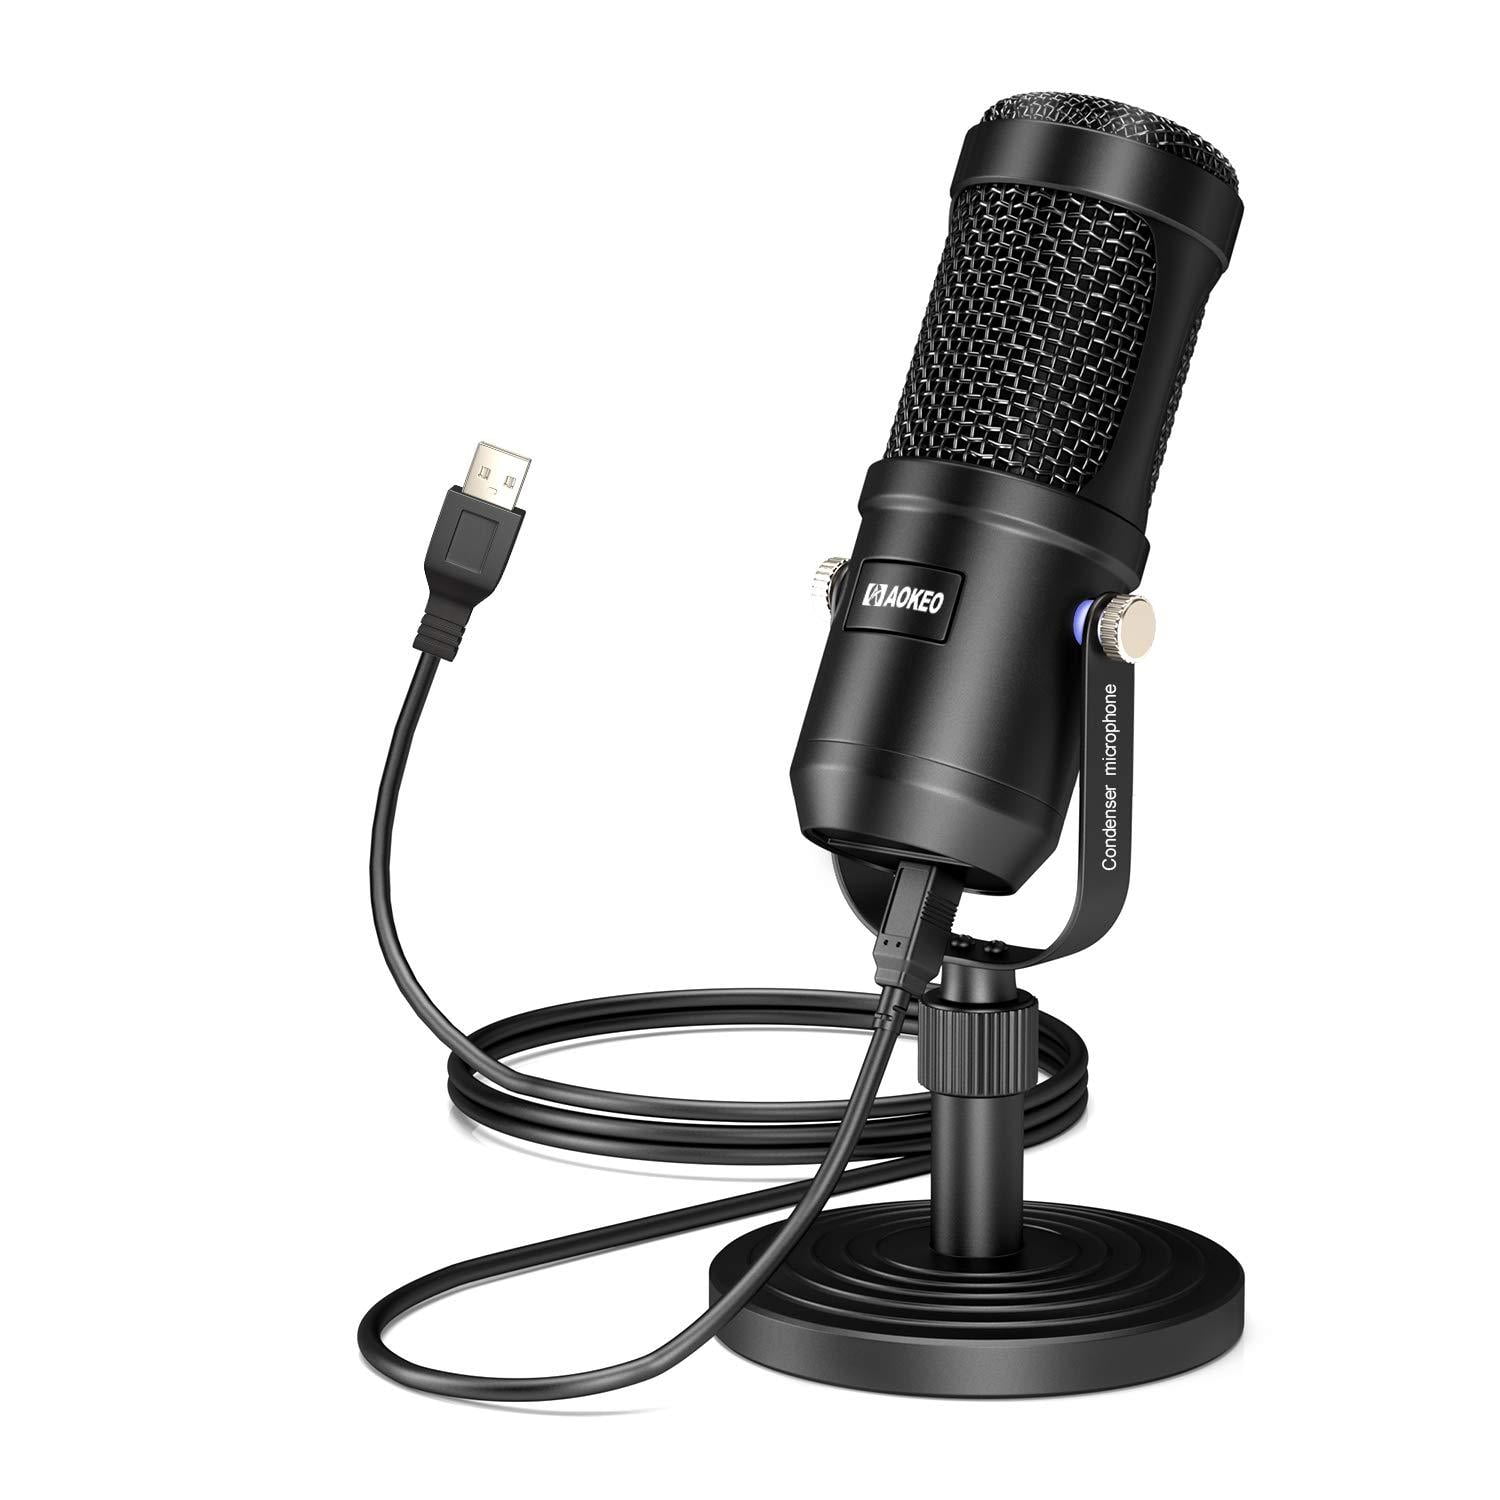  Aokeo Professional Studio Recording Microphone